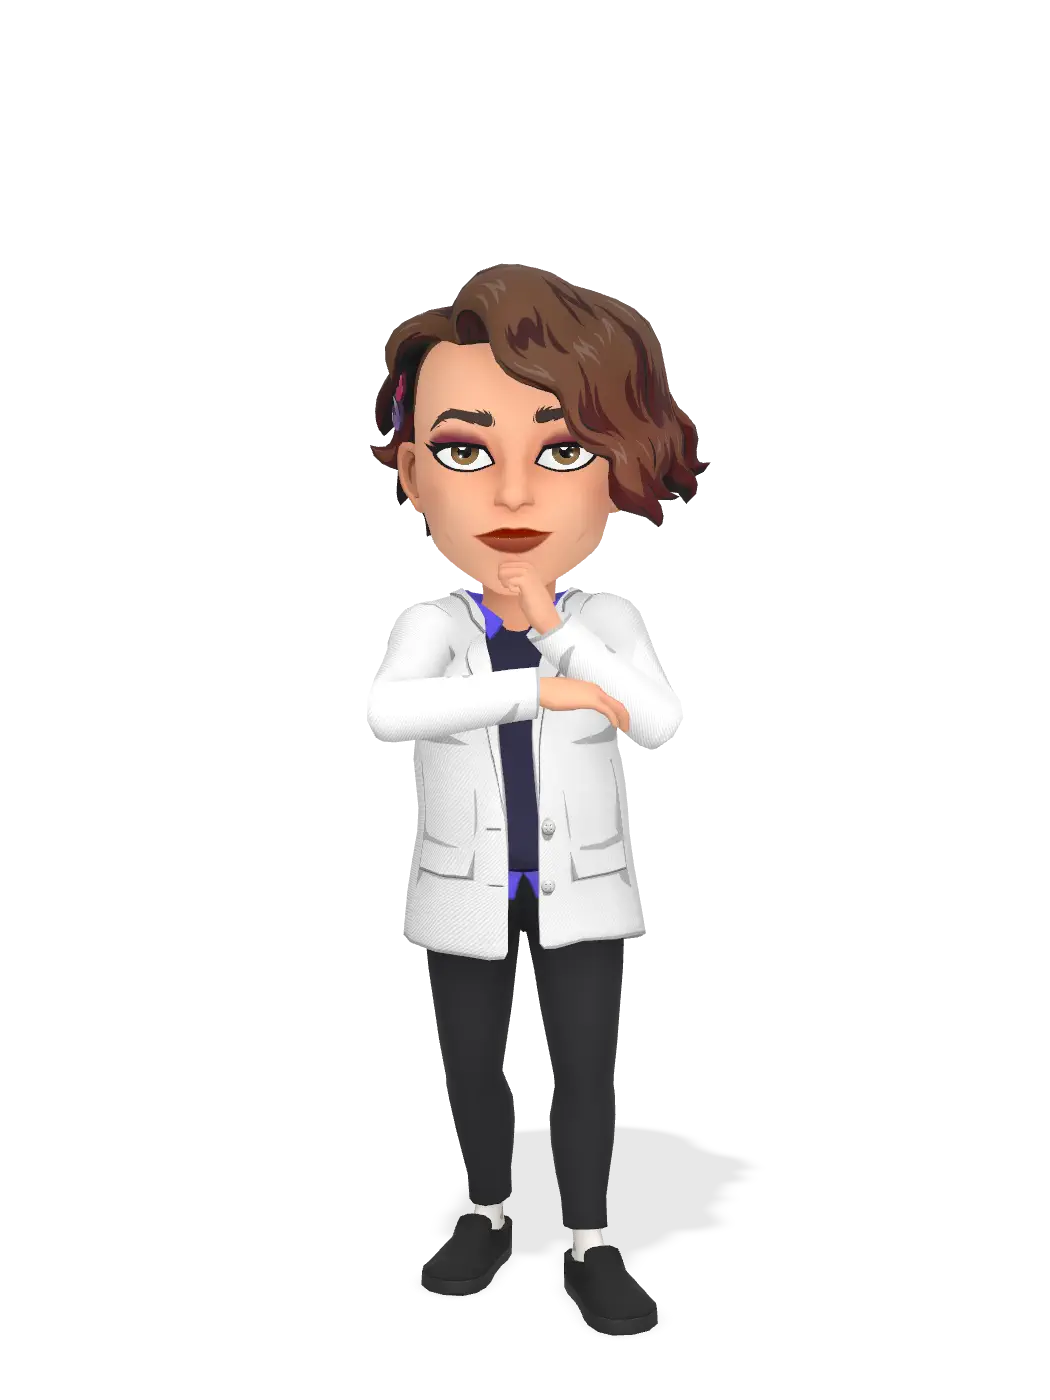 3D Bitmoji for natksciencegay avatar